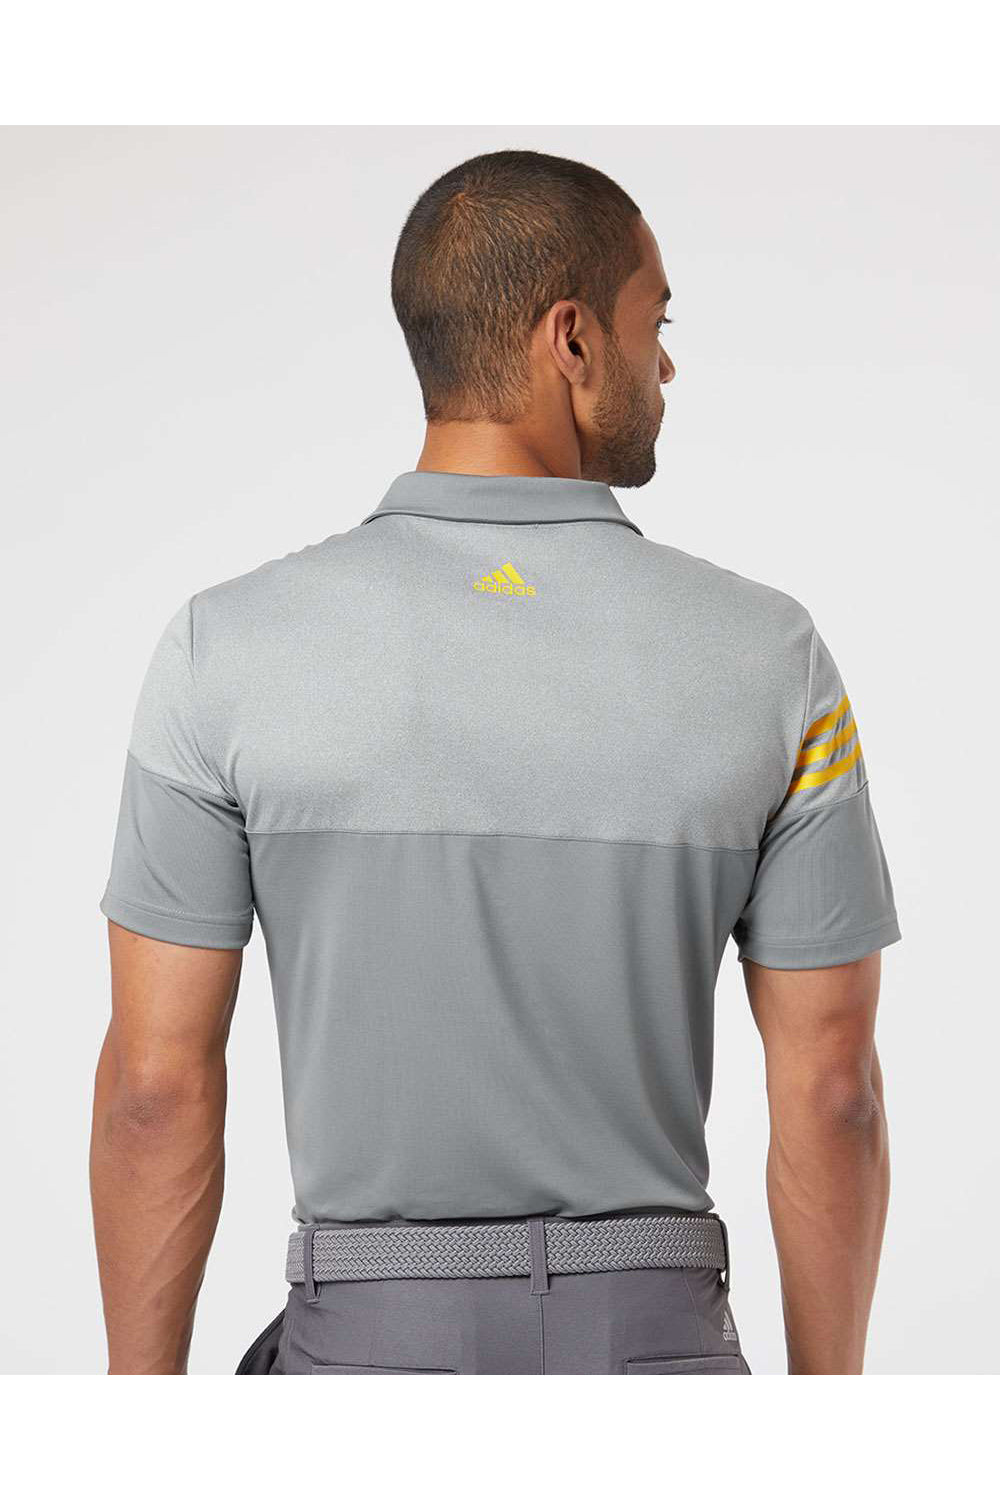 Adidas A213 Mens 3 Stripes Heathered Colorblock Short Sleeve Polo Shirt Vista Grey/Yellow Model Back